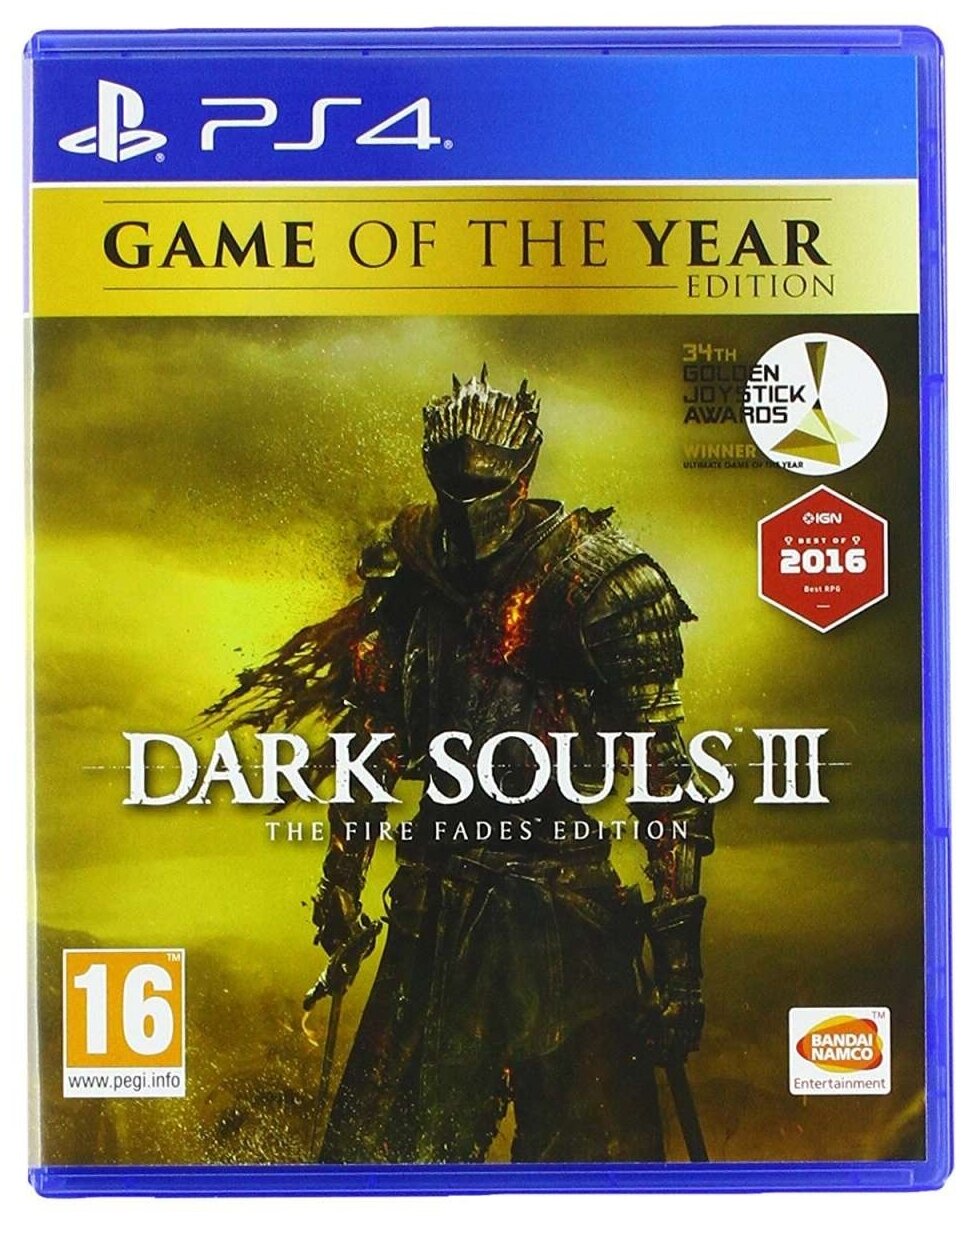 Dark Souls 3 (III) The Fire Fades Edition (PS4) английский язык